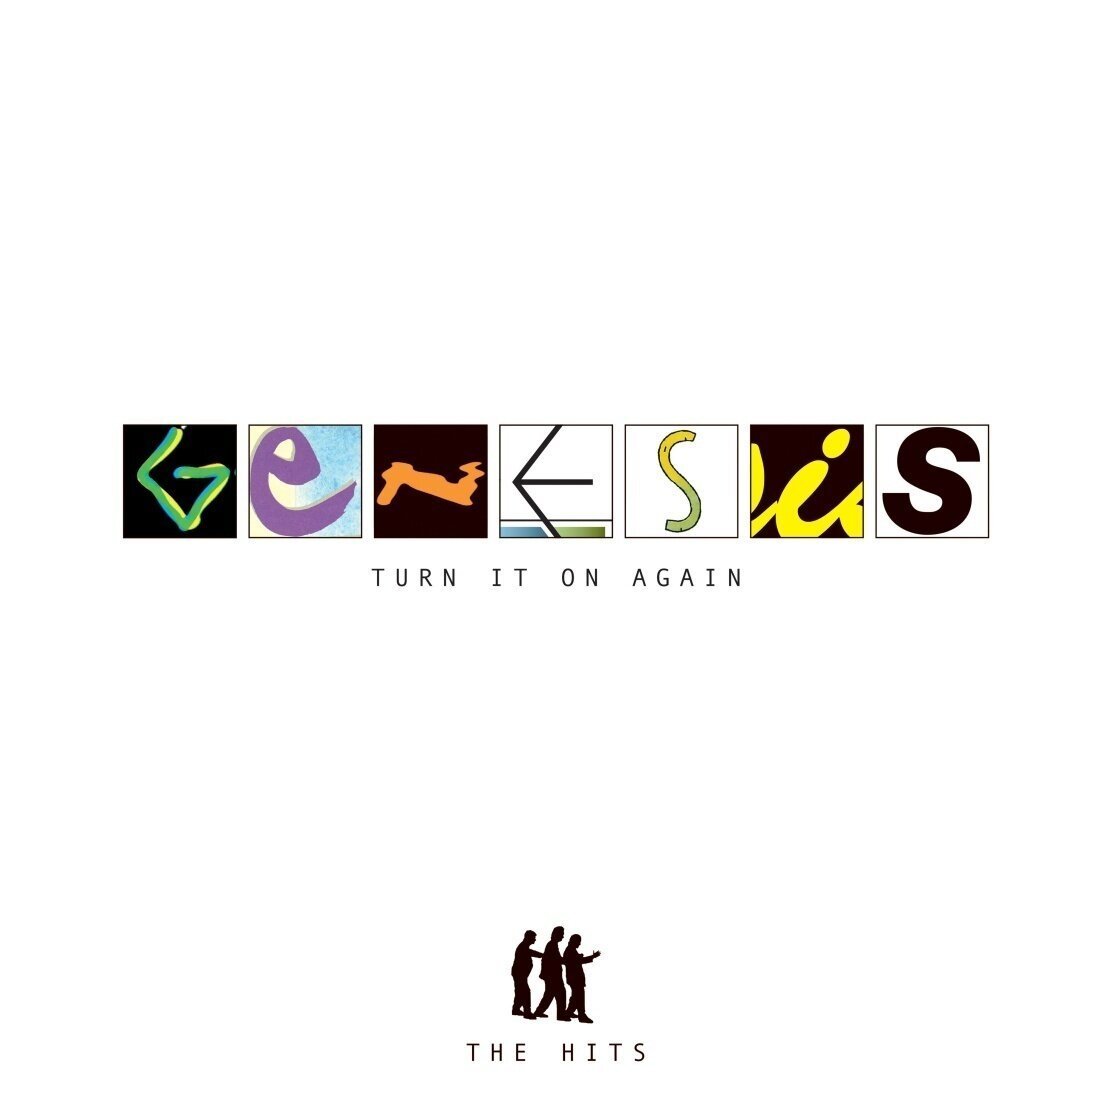 CD musique Genesis - Turn It On Again: The Hits (CD)